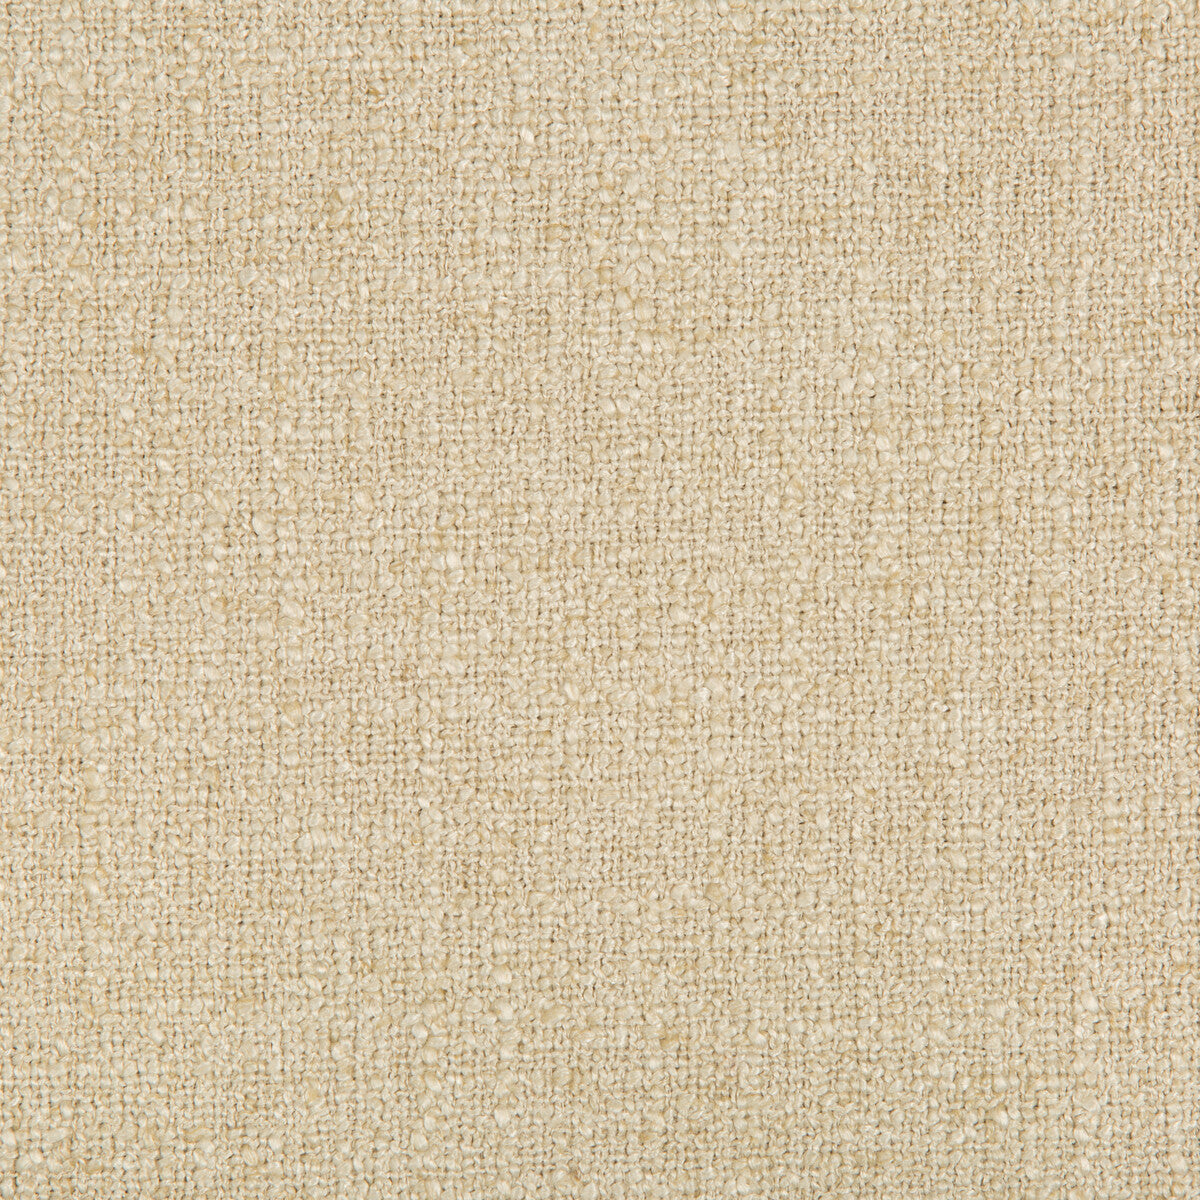 Kravet Smart fabric in 35147-16 color - pattern 35147.16.0 - by Kravet Smart